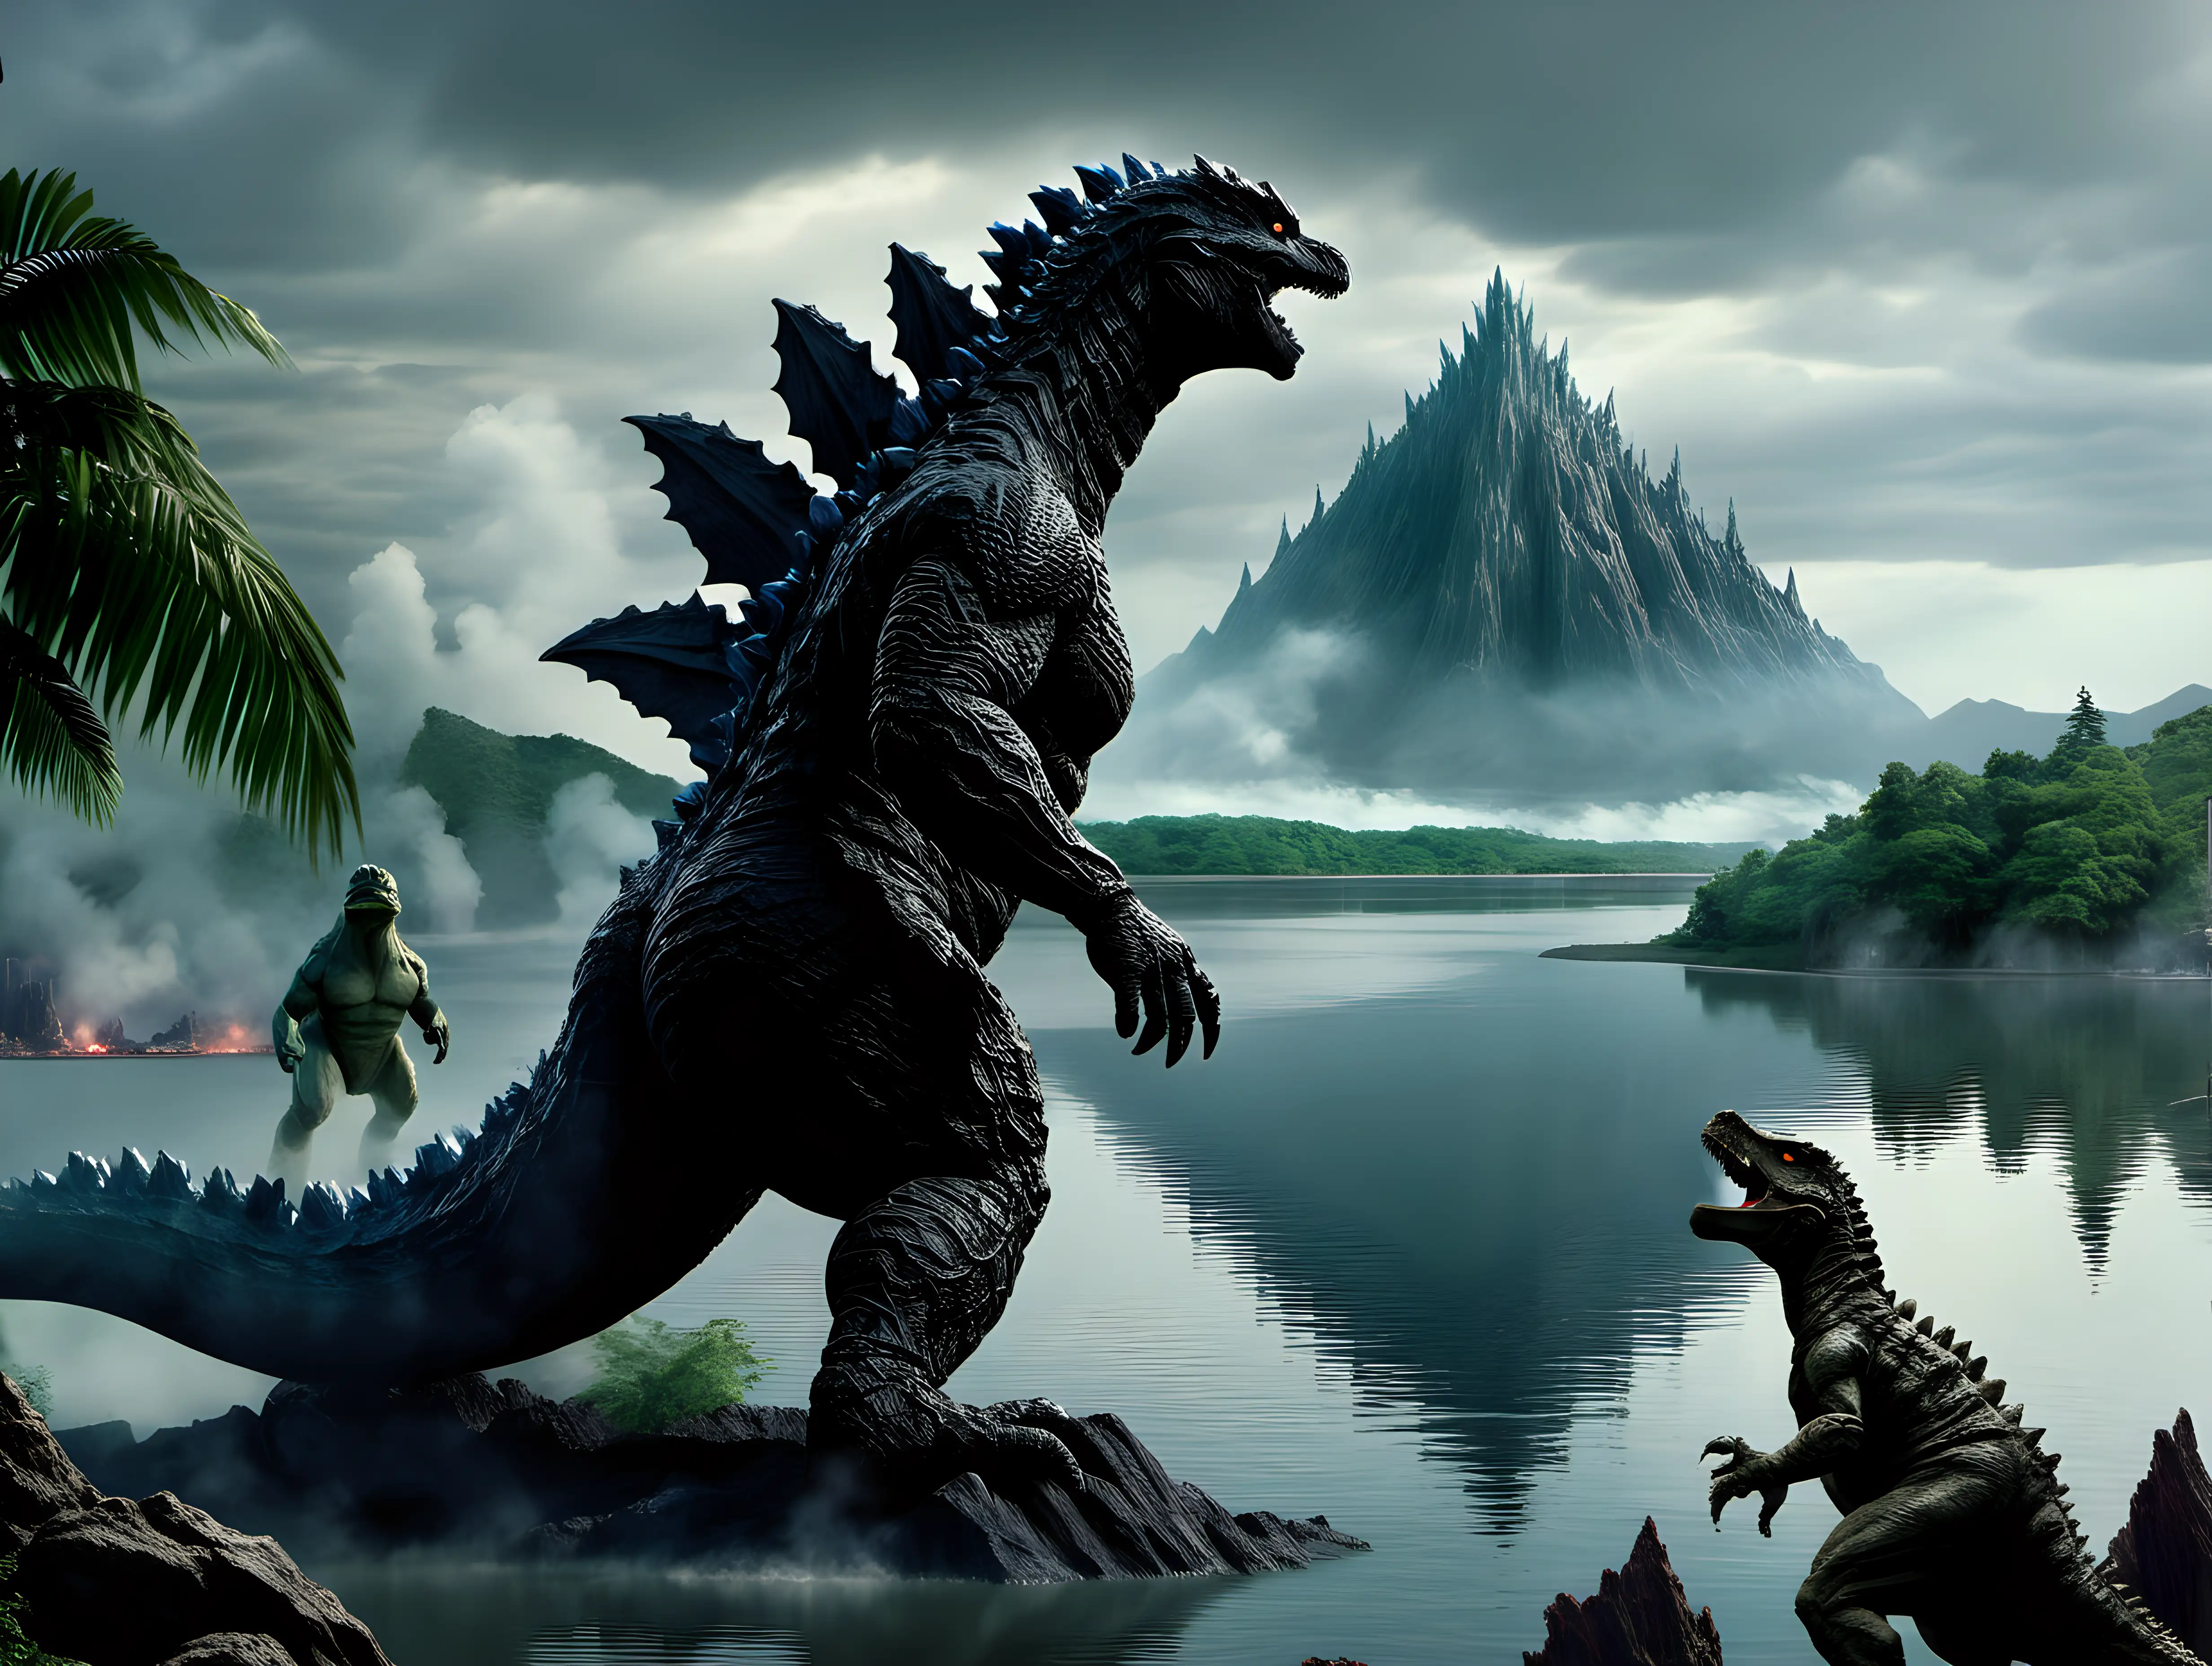 Godzill looking across a lake at an island full of dinosaurs